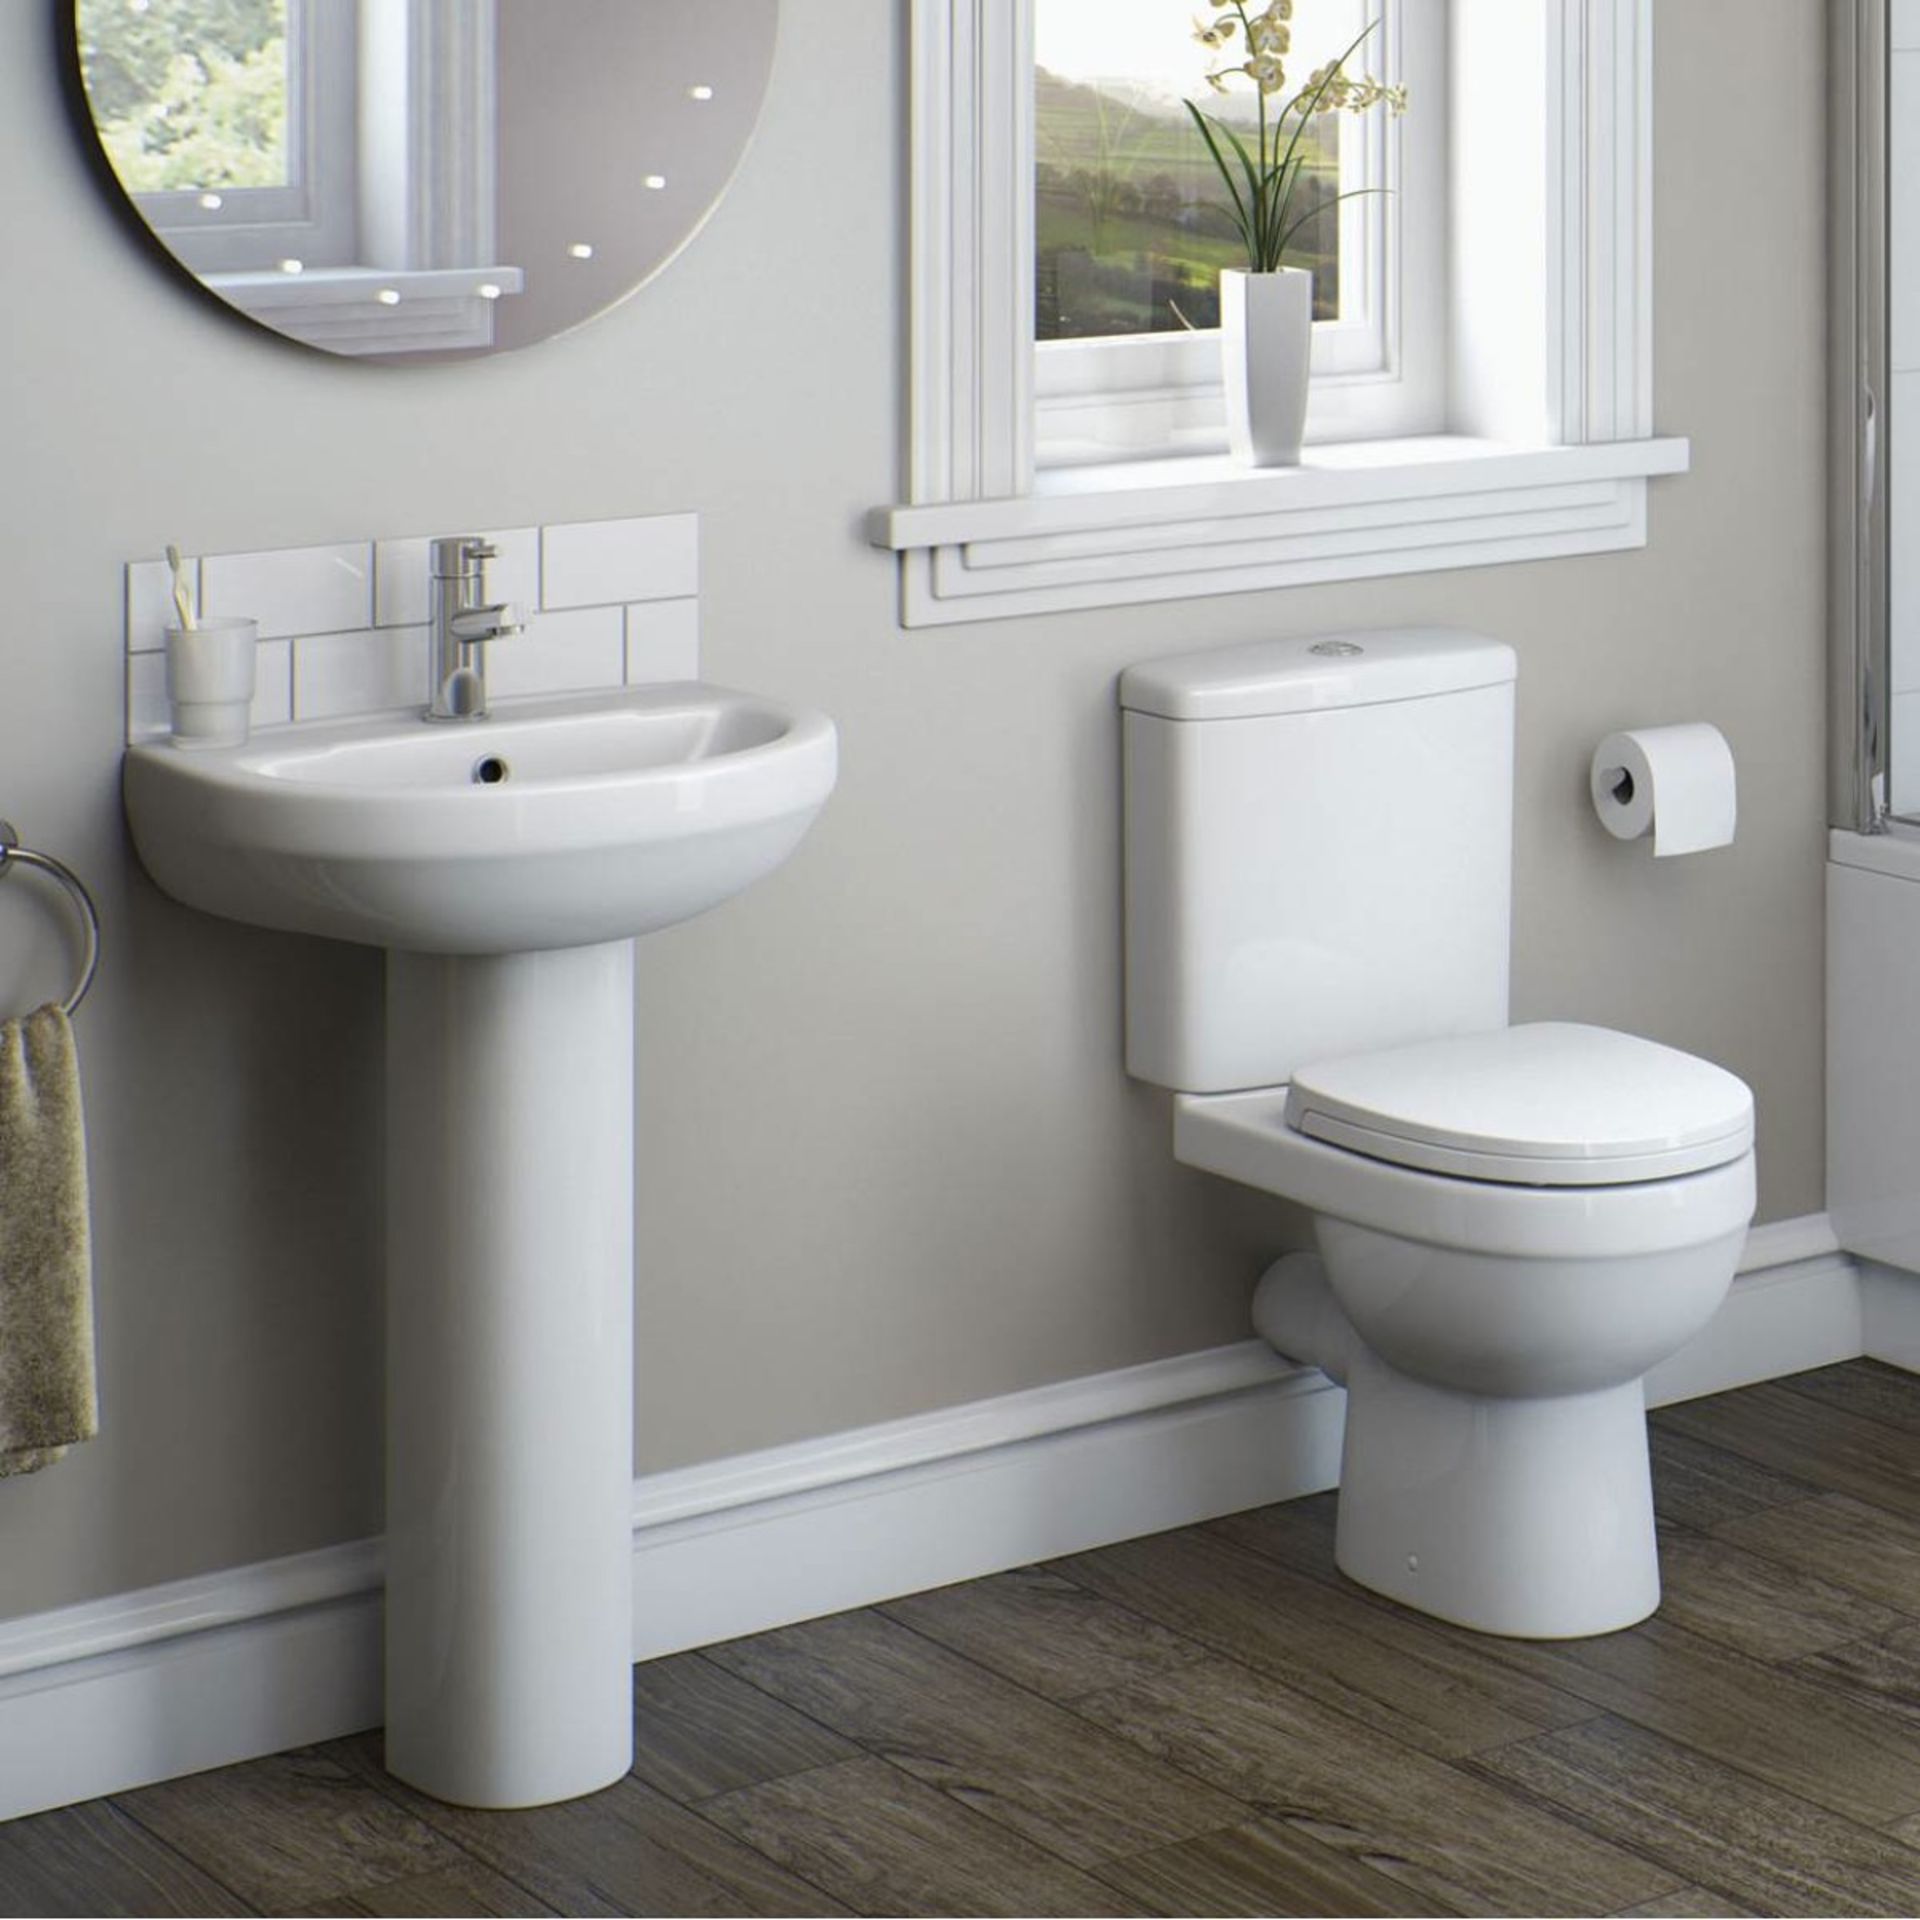 1 x Pallet of Bathroom Stock From Major Online Retailer - Fantastic Resale Opportnity - No Reserve! - Image 3 of 4